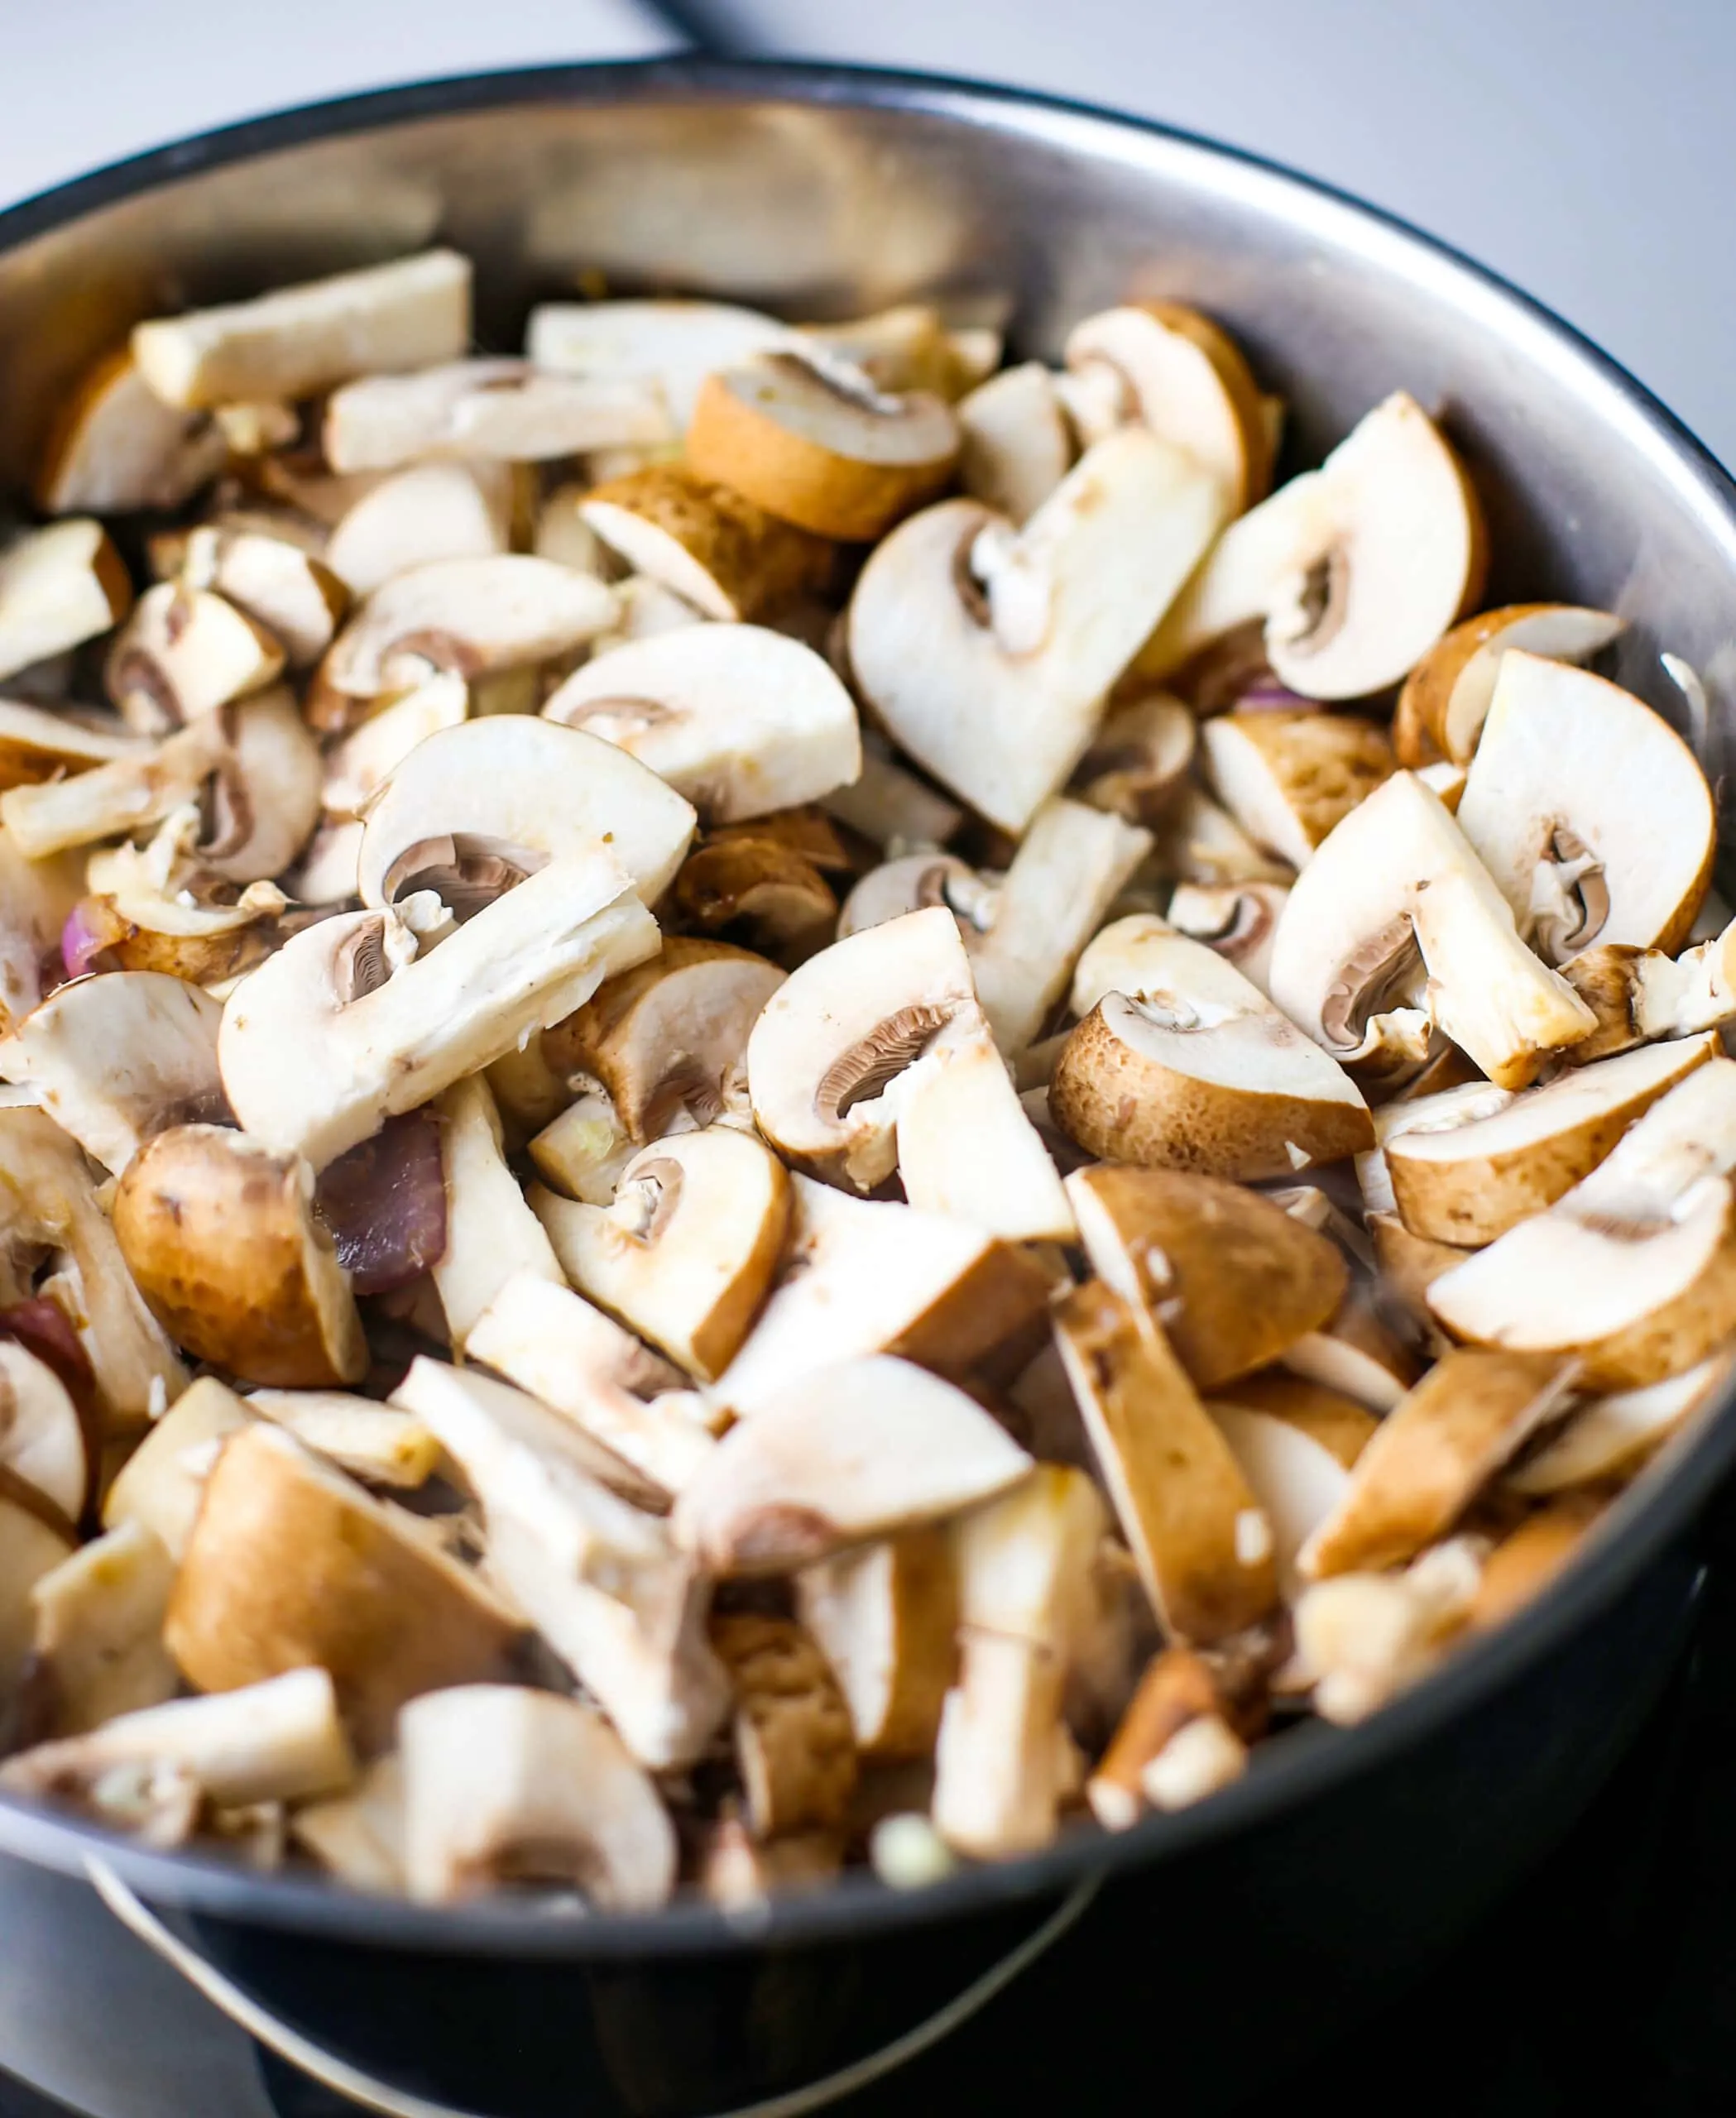 Sliced cremini mushrooms in a stainless steel saucepan.